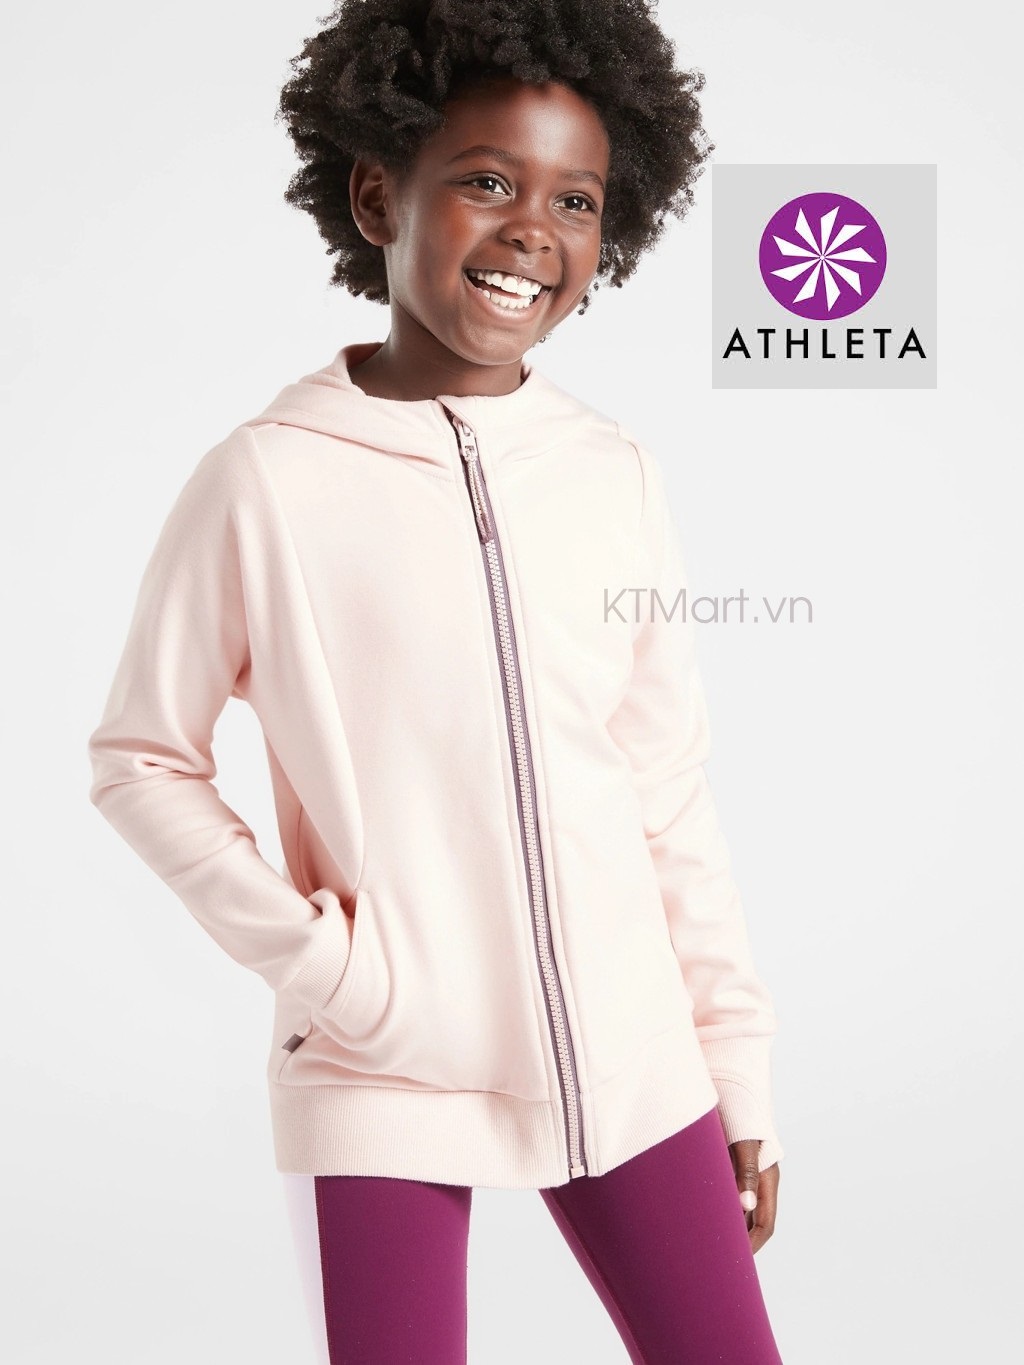 Athleta Girl Fearless Full Zip Jacket 486421 Athleta size M, L